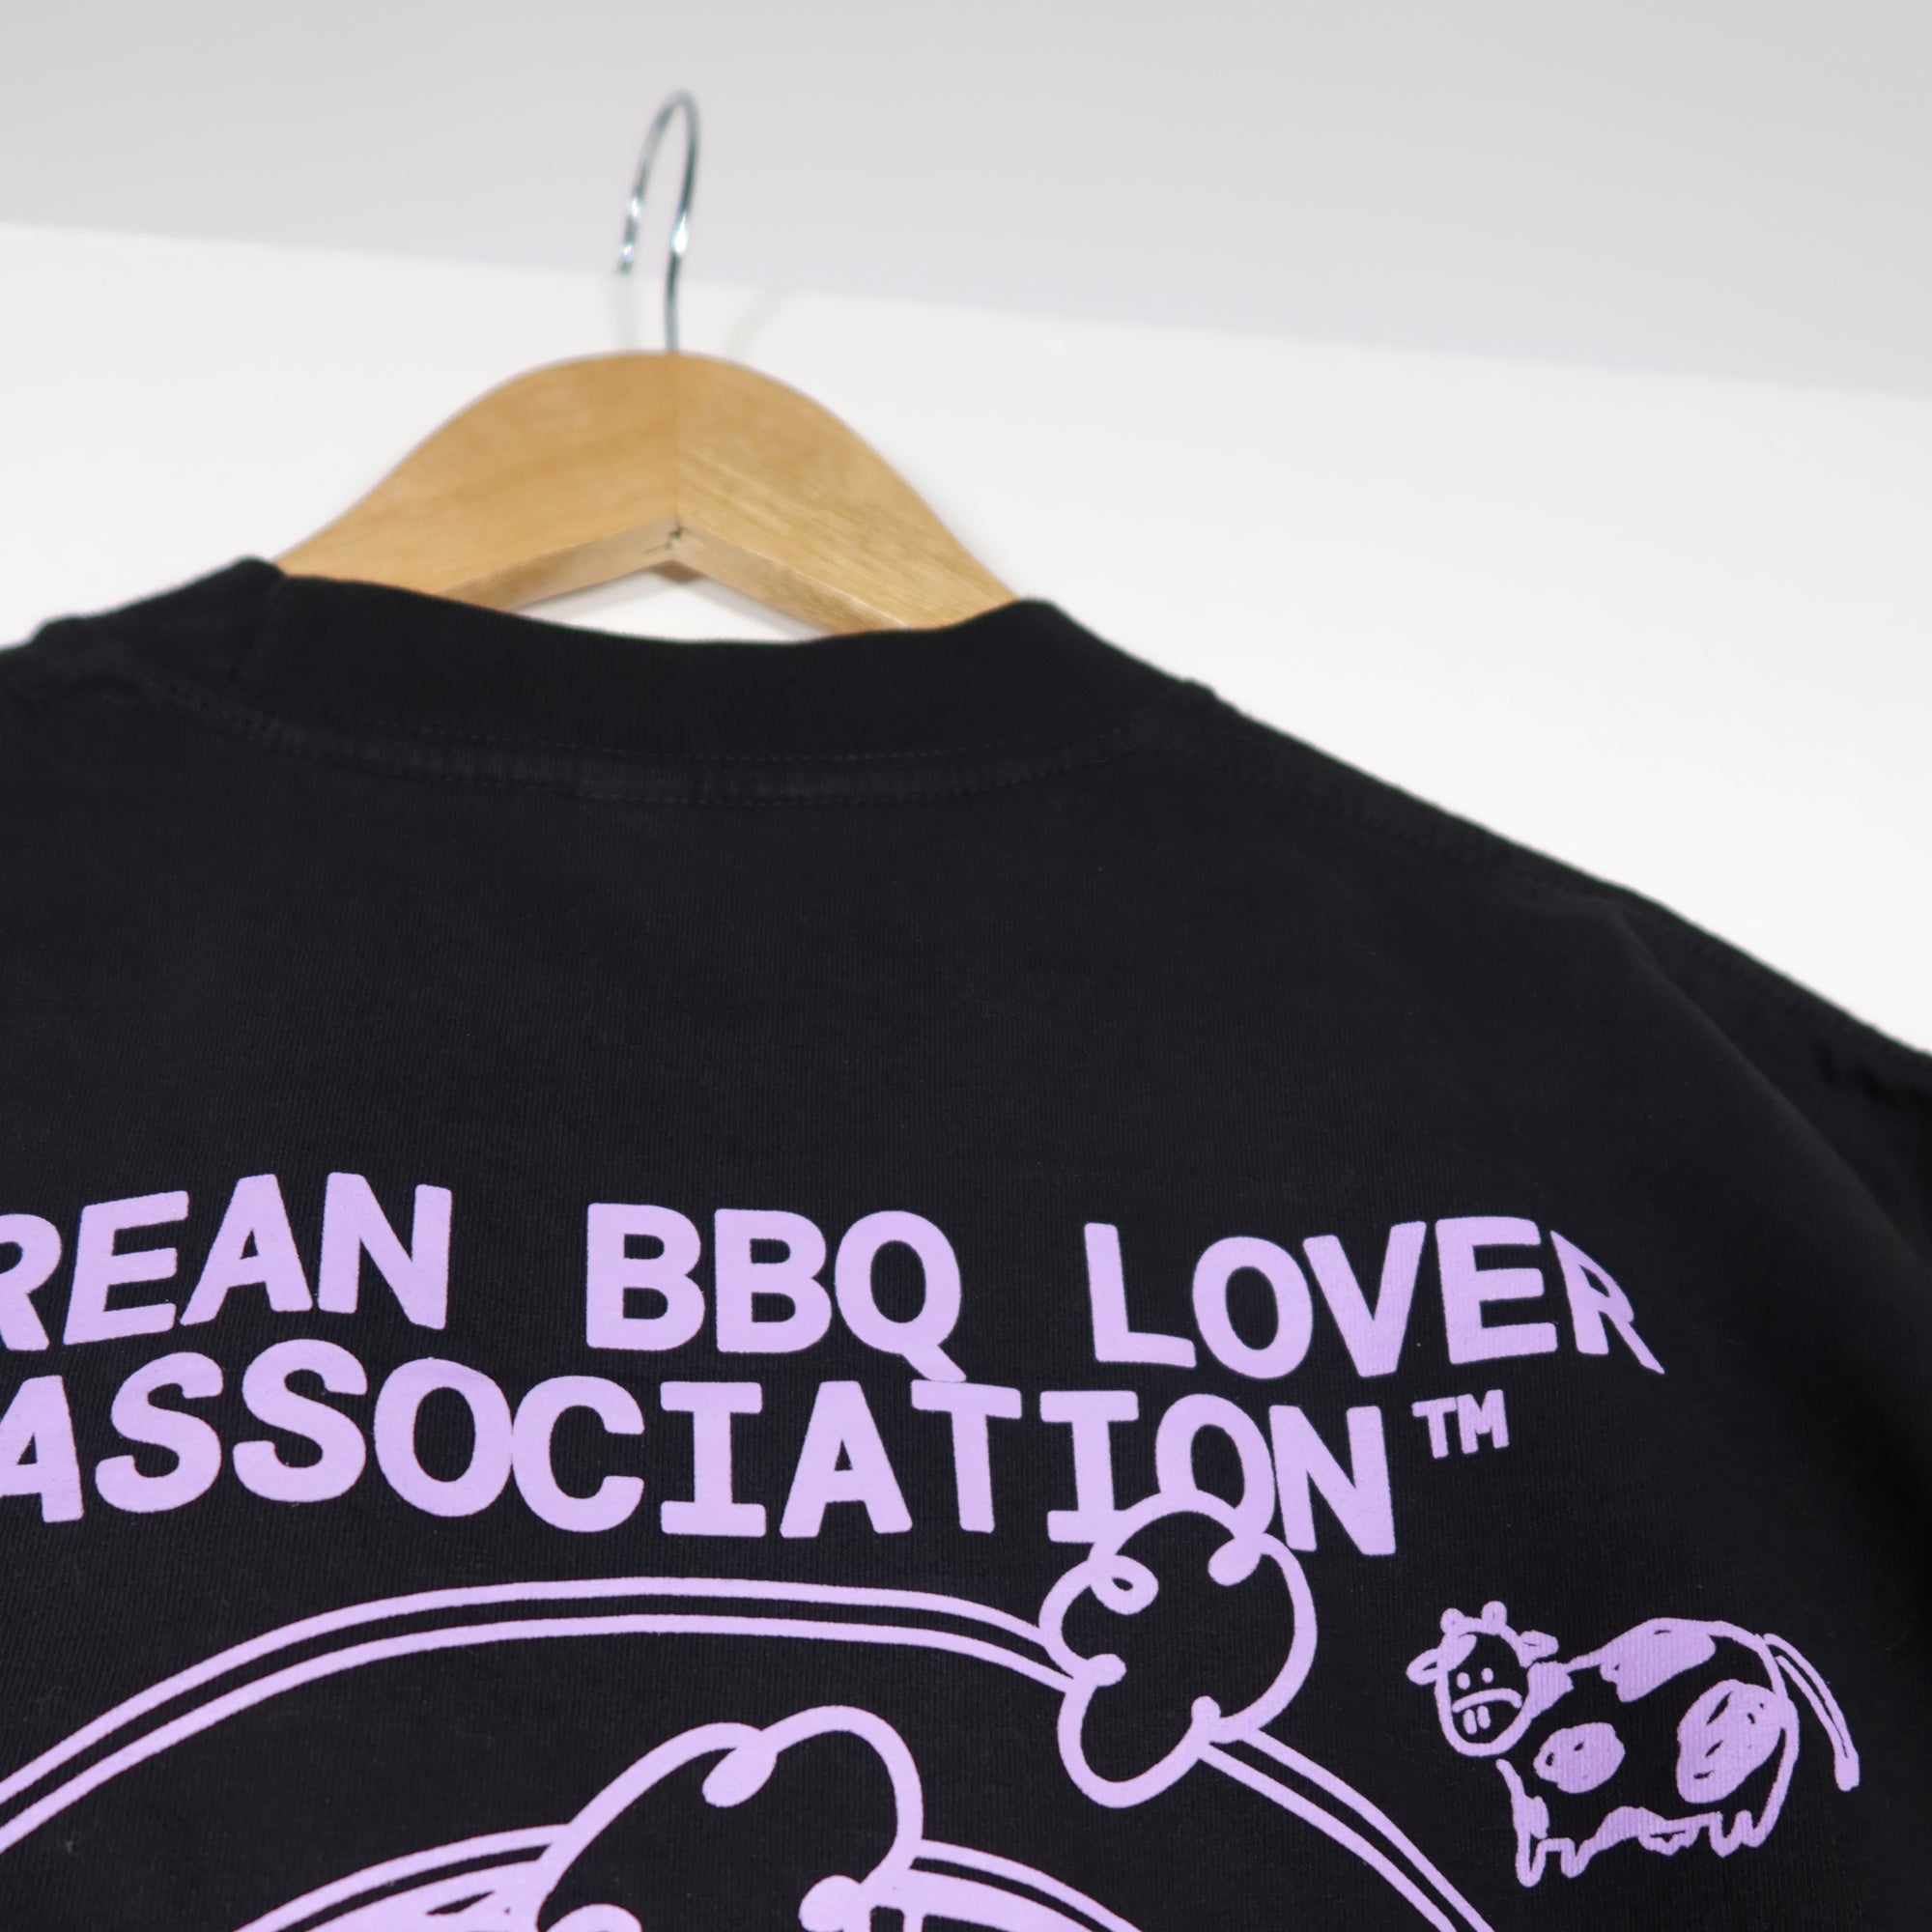 Korean BBQ Lover Association T-Shirt - Black